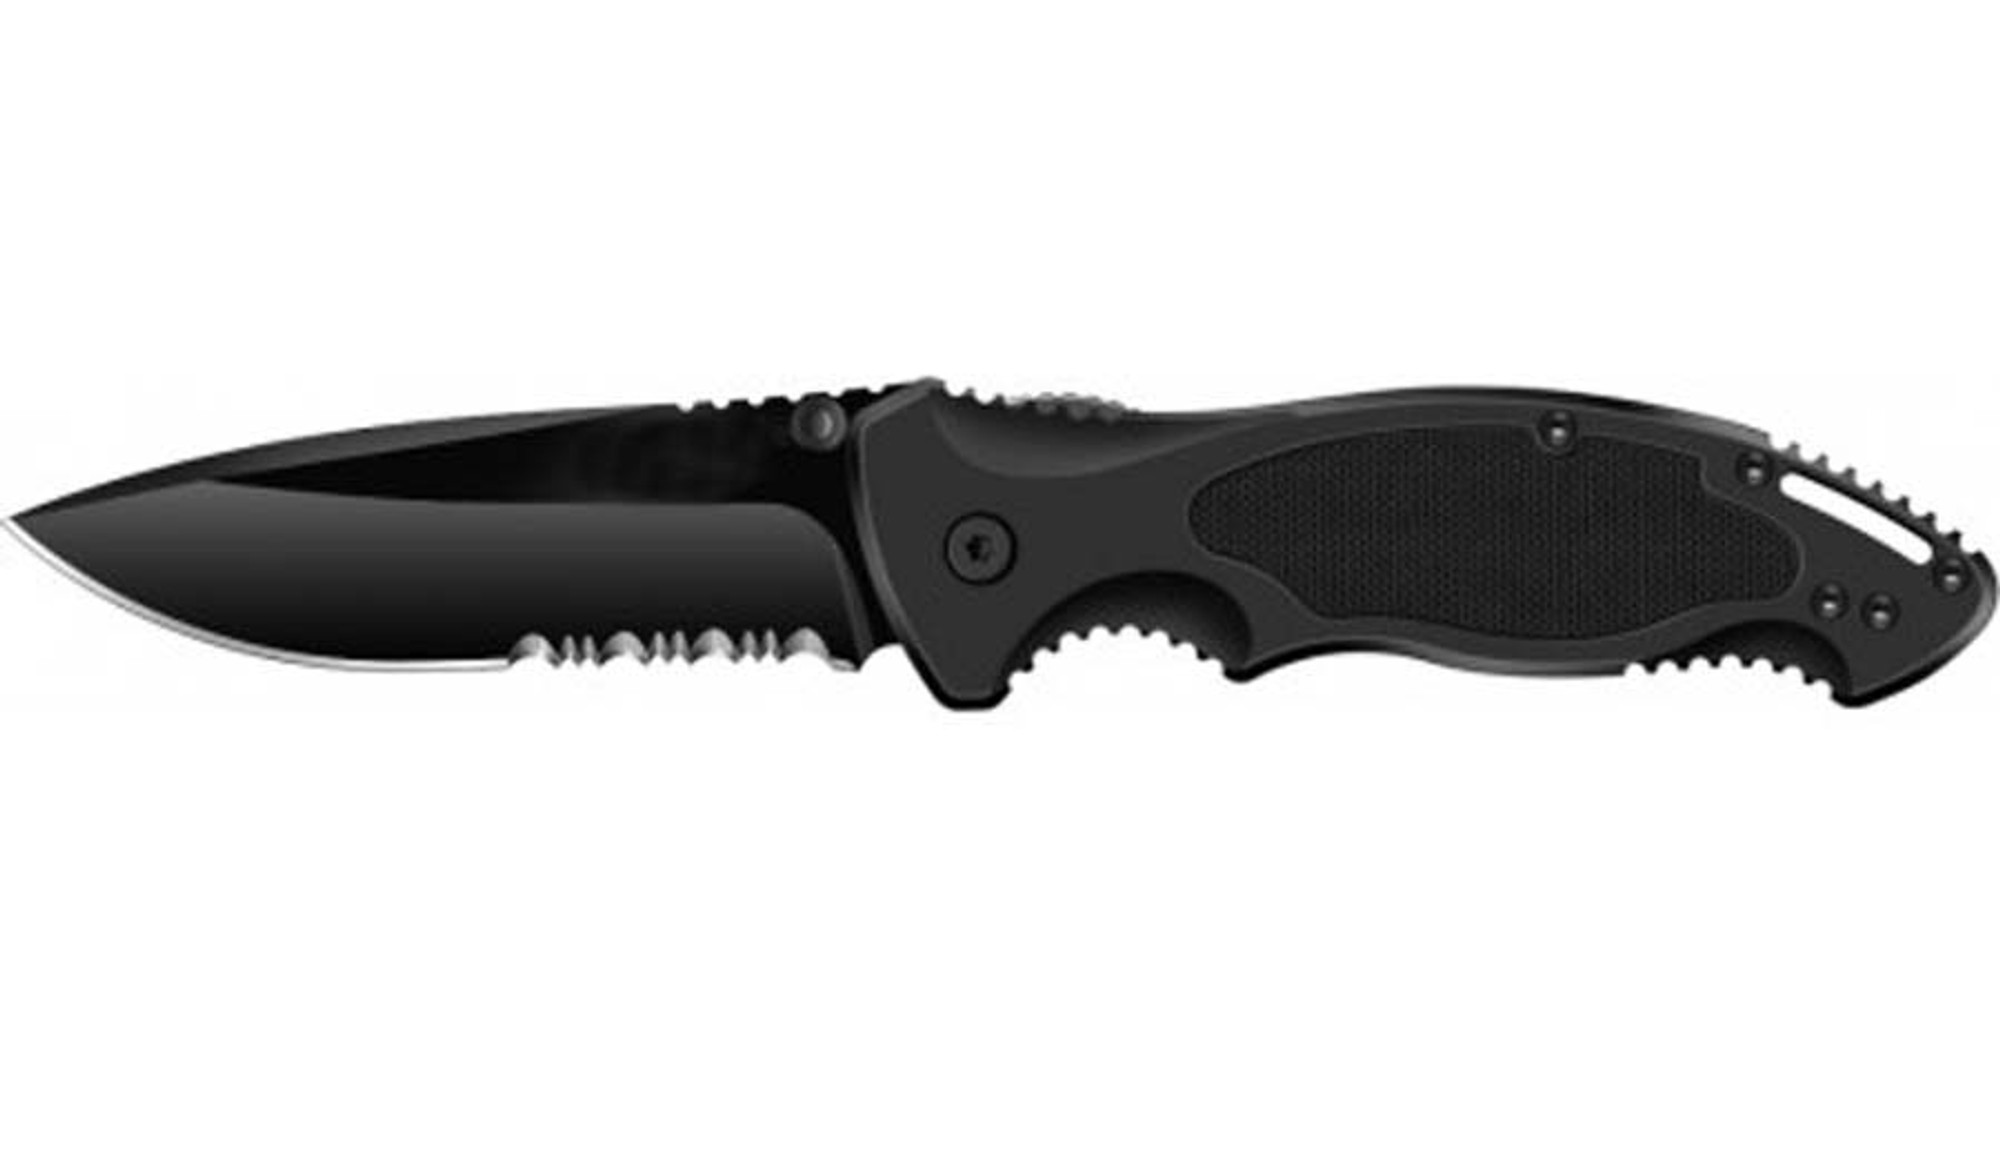 RUKO RUK0146SA, 440A, 3-3/8" Folding Blade Assisted Open Knife, G10 Handle, boxed